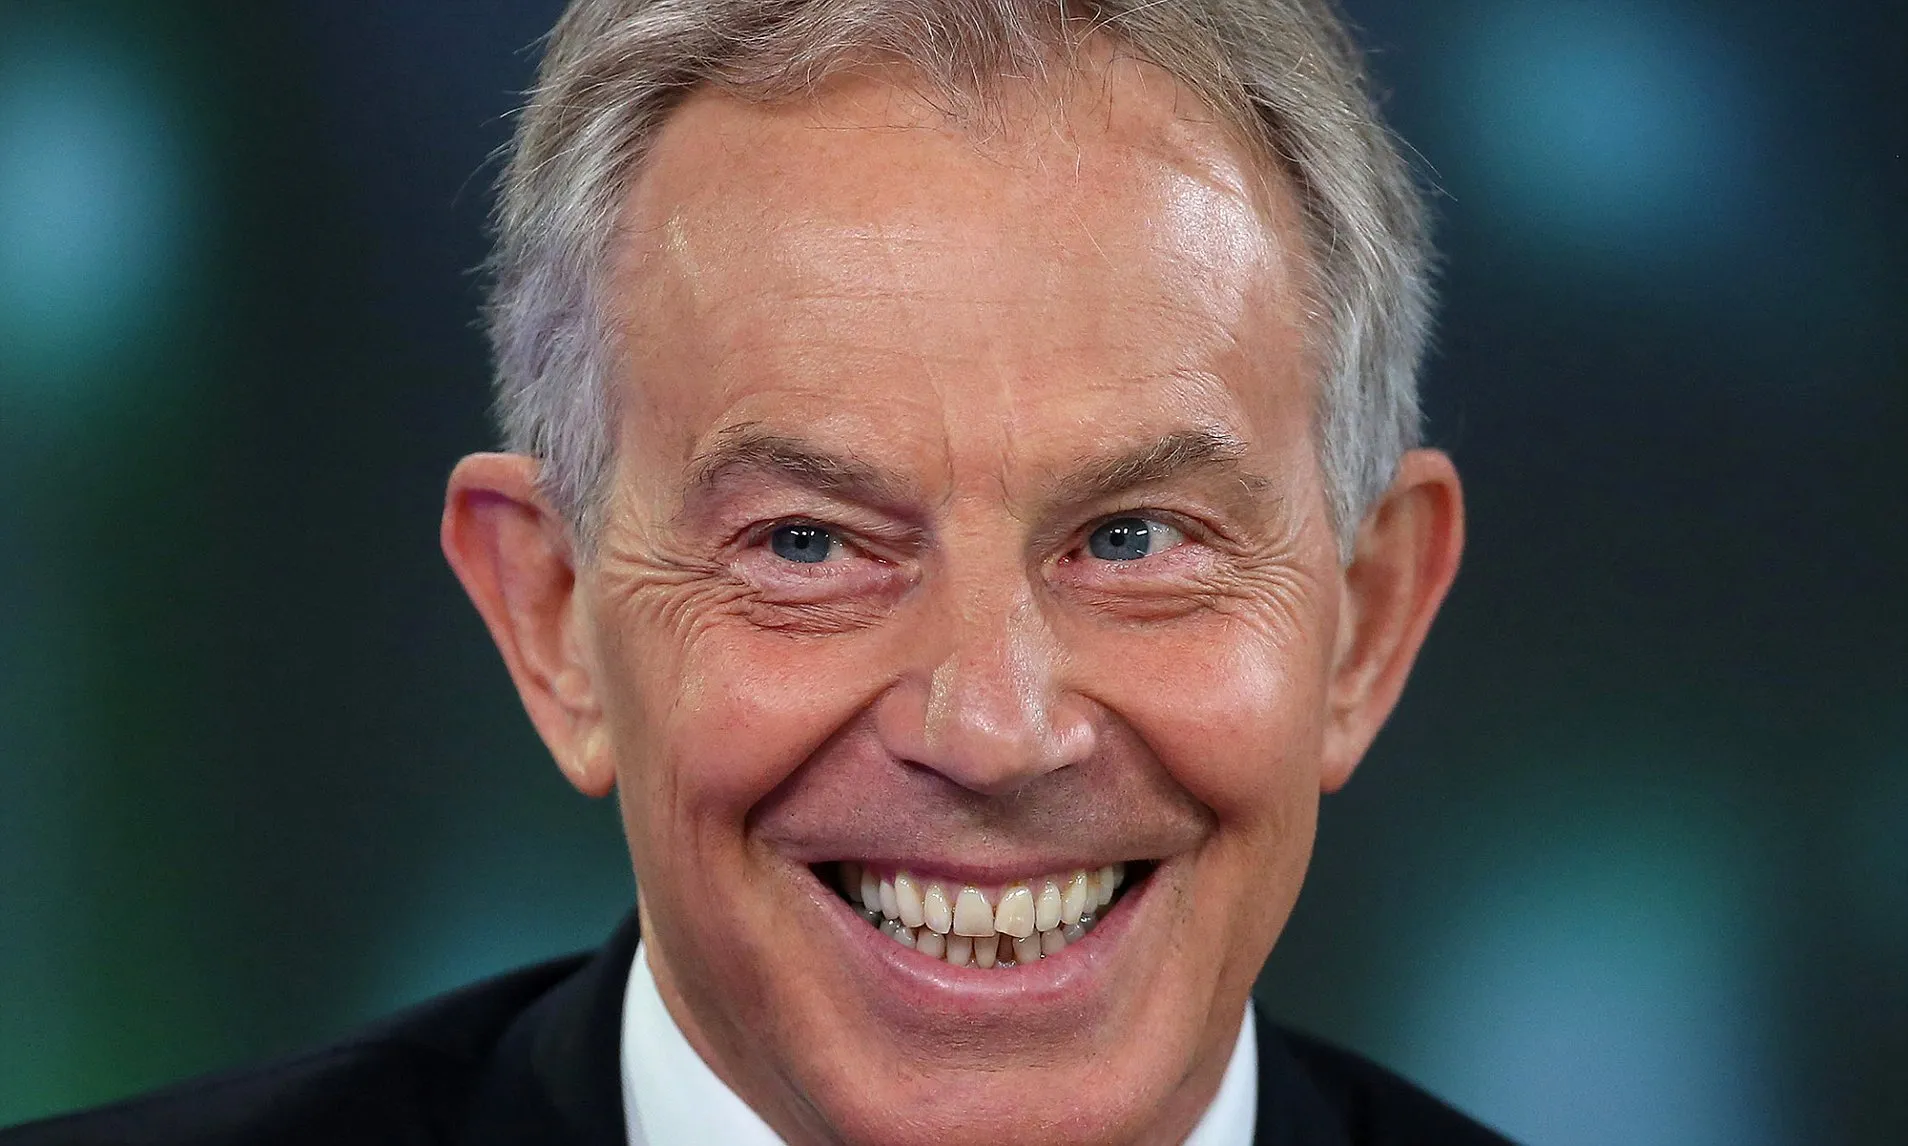 Tony Blair Praises ‘Towering’ Jacob Rothschild’s Advancement of ‘Global Causes’